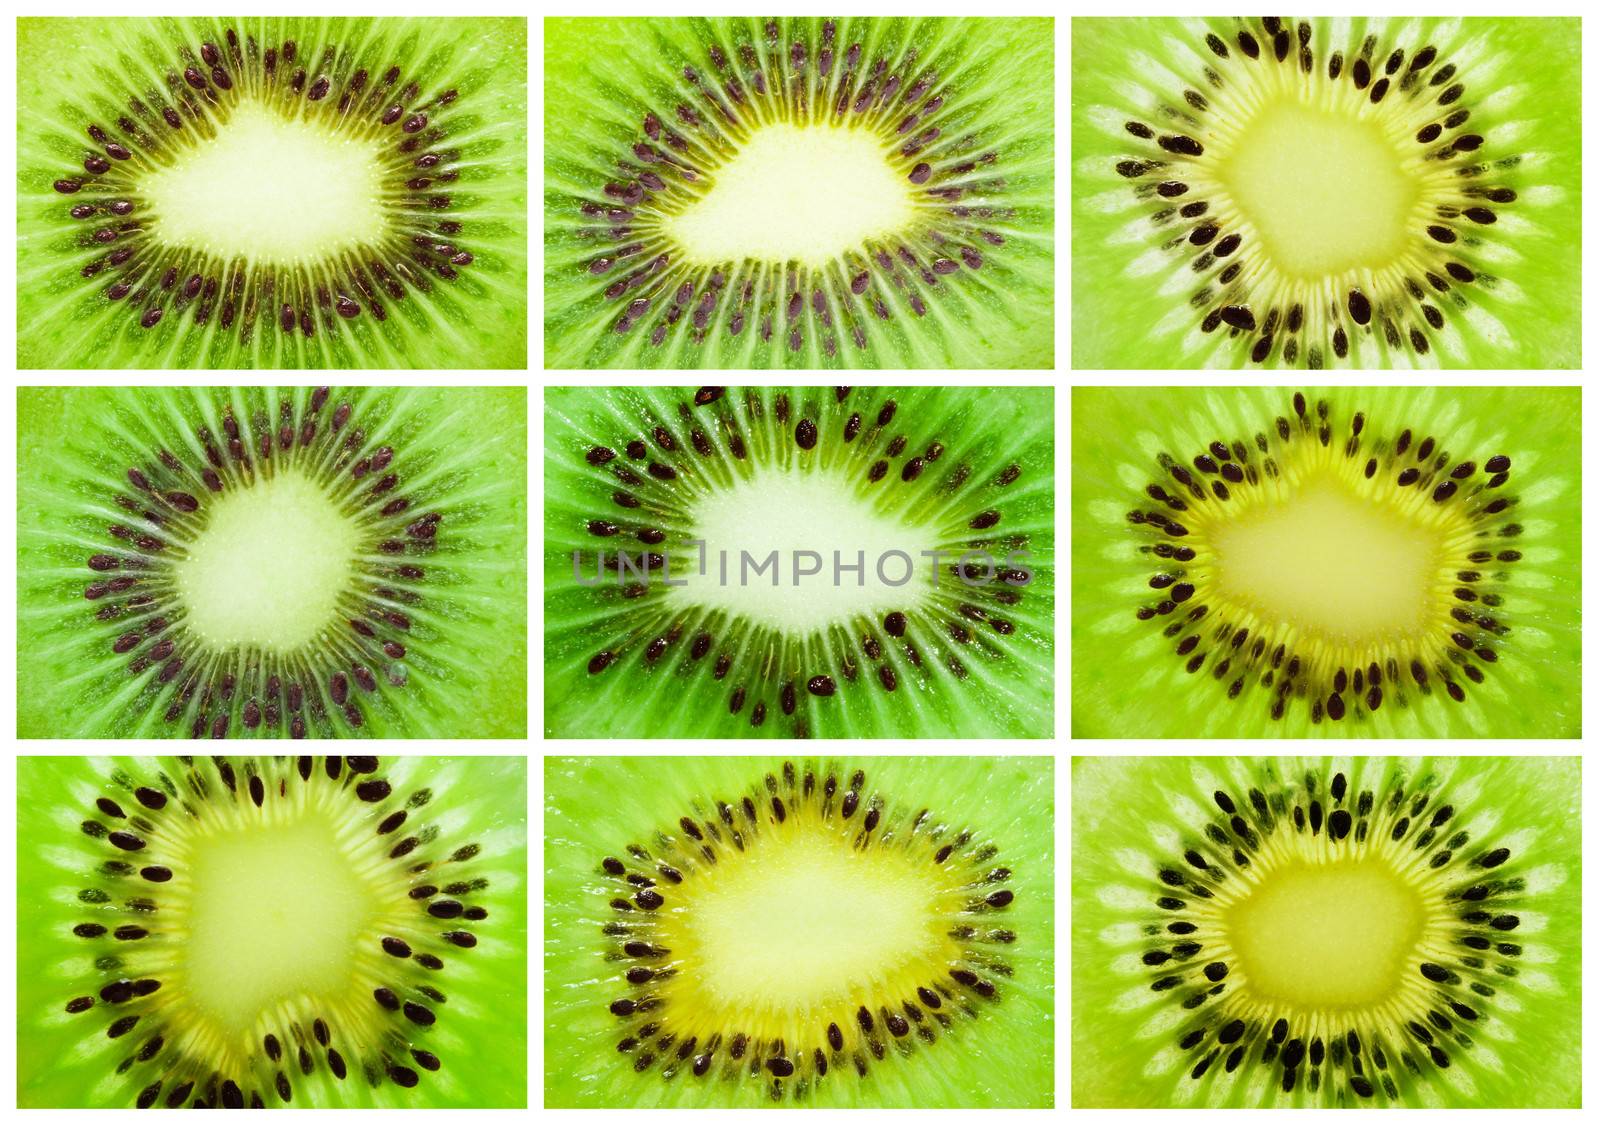 Collection of fresh juicy kiwi fruit backgrounds